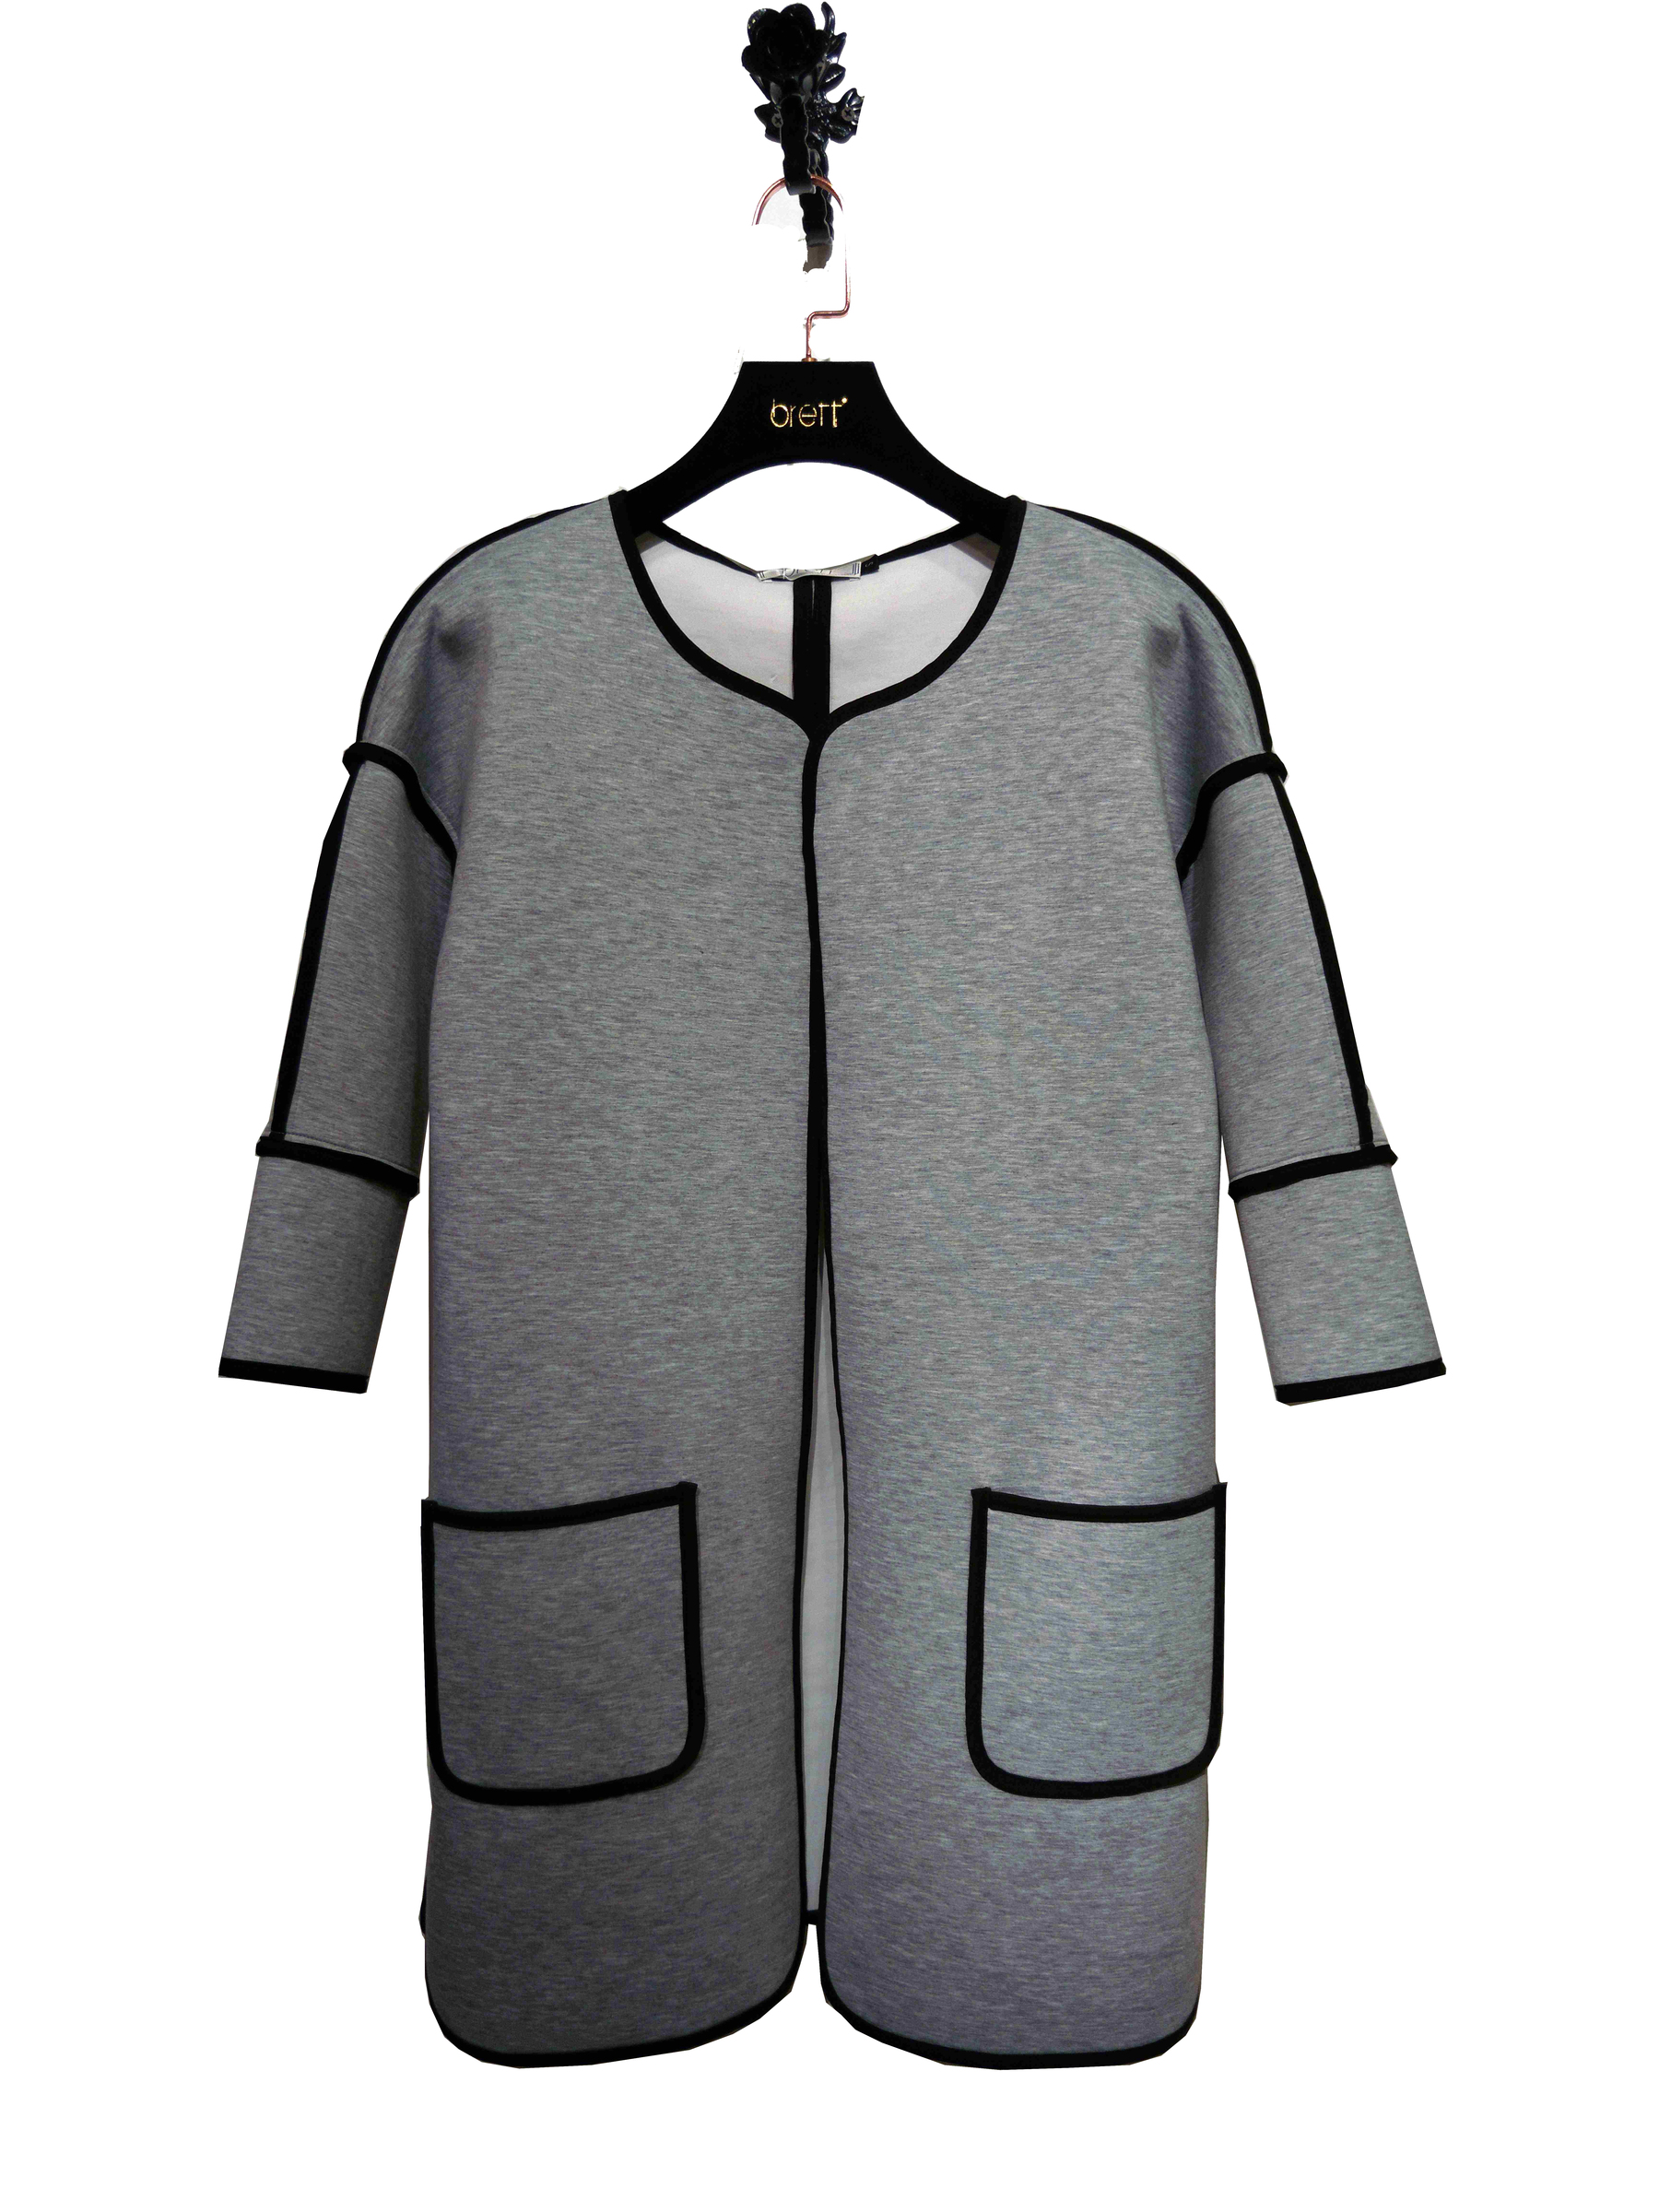 2017AW New Fashion Style Grey Scuba with BlackEdge Soft Flexible Straight Coat (2).jpg